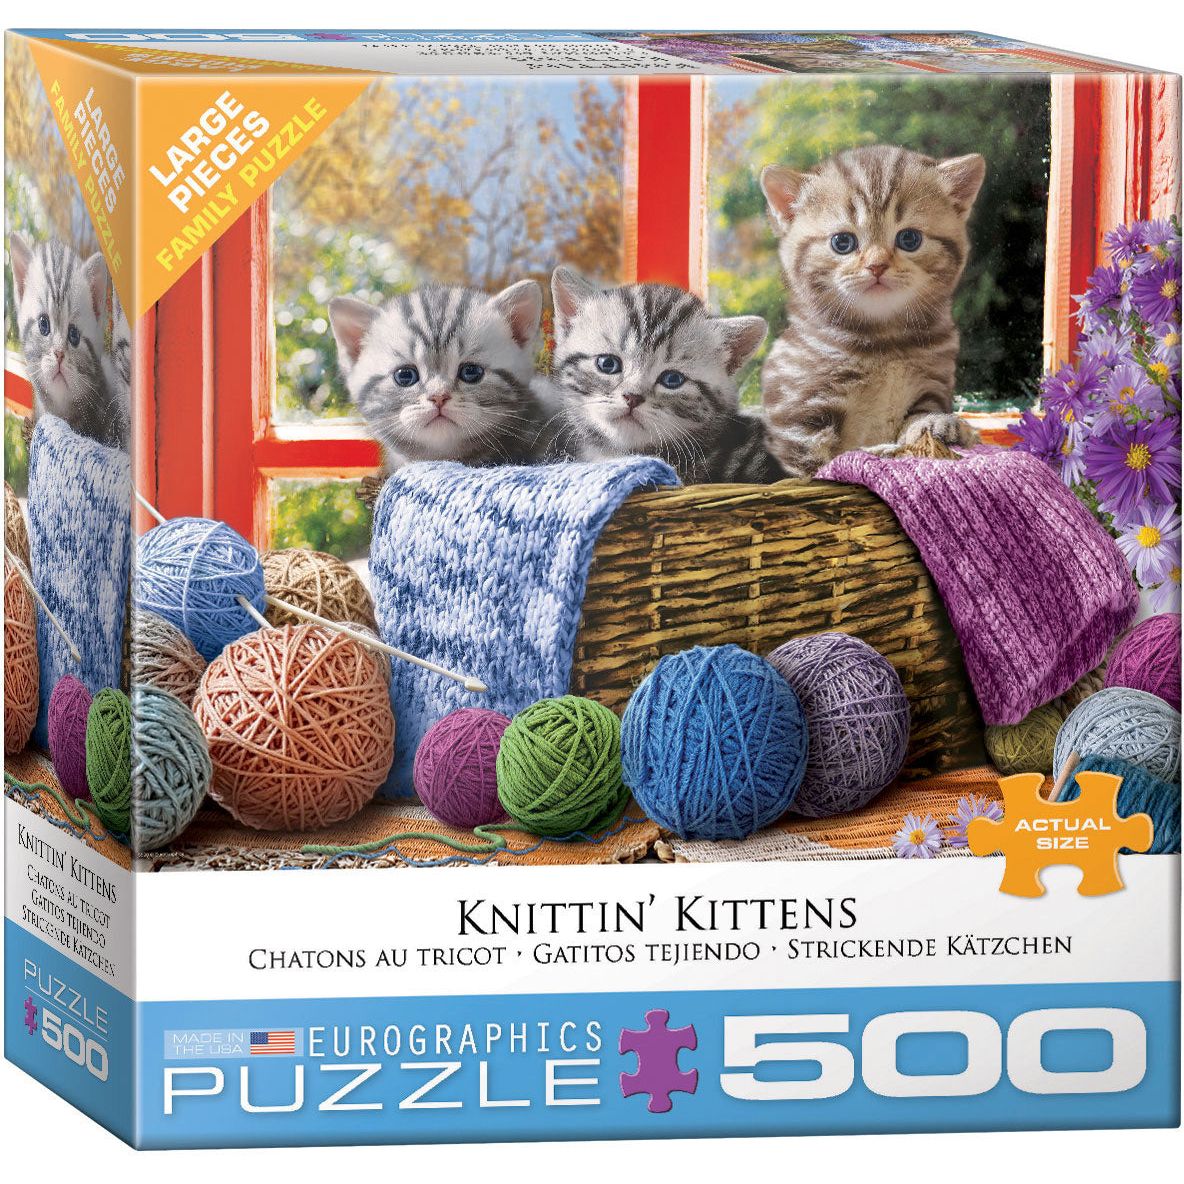 Knittin' Kittens - Zinnias Gift Boutique